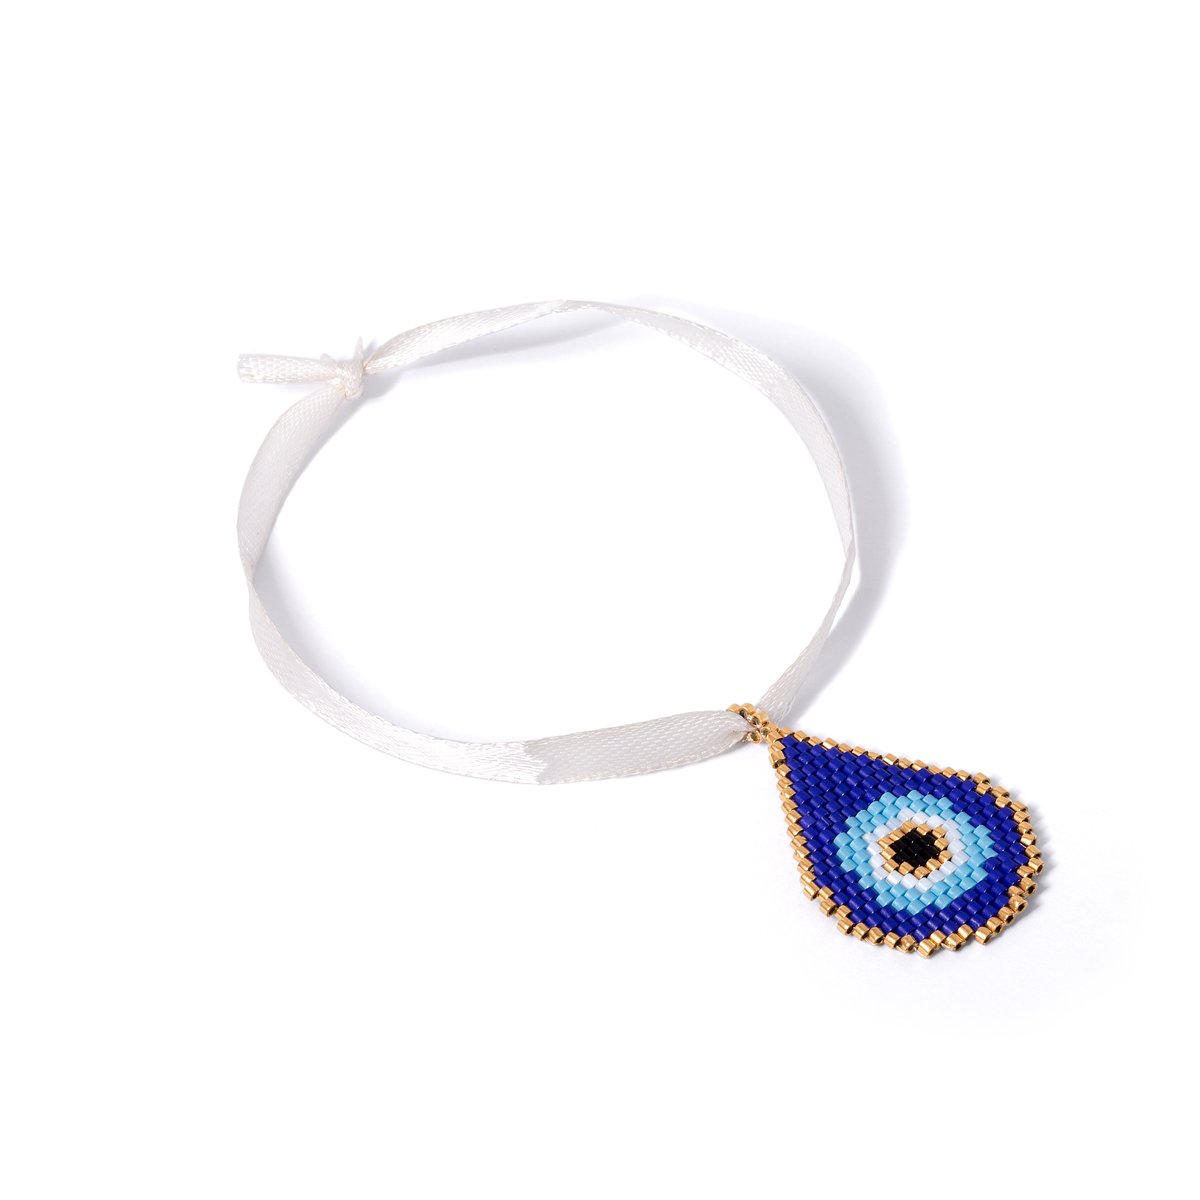 Gold bracelet with eye-shaped beads